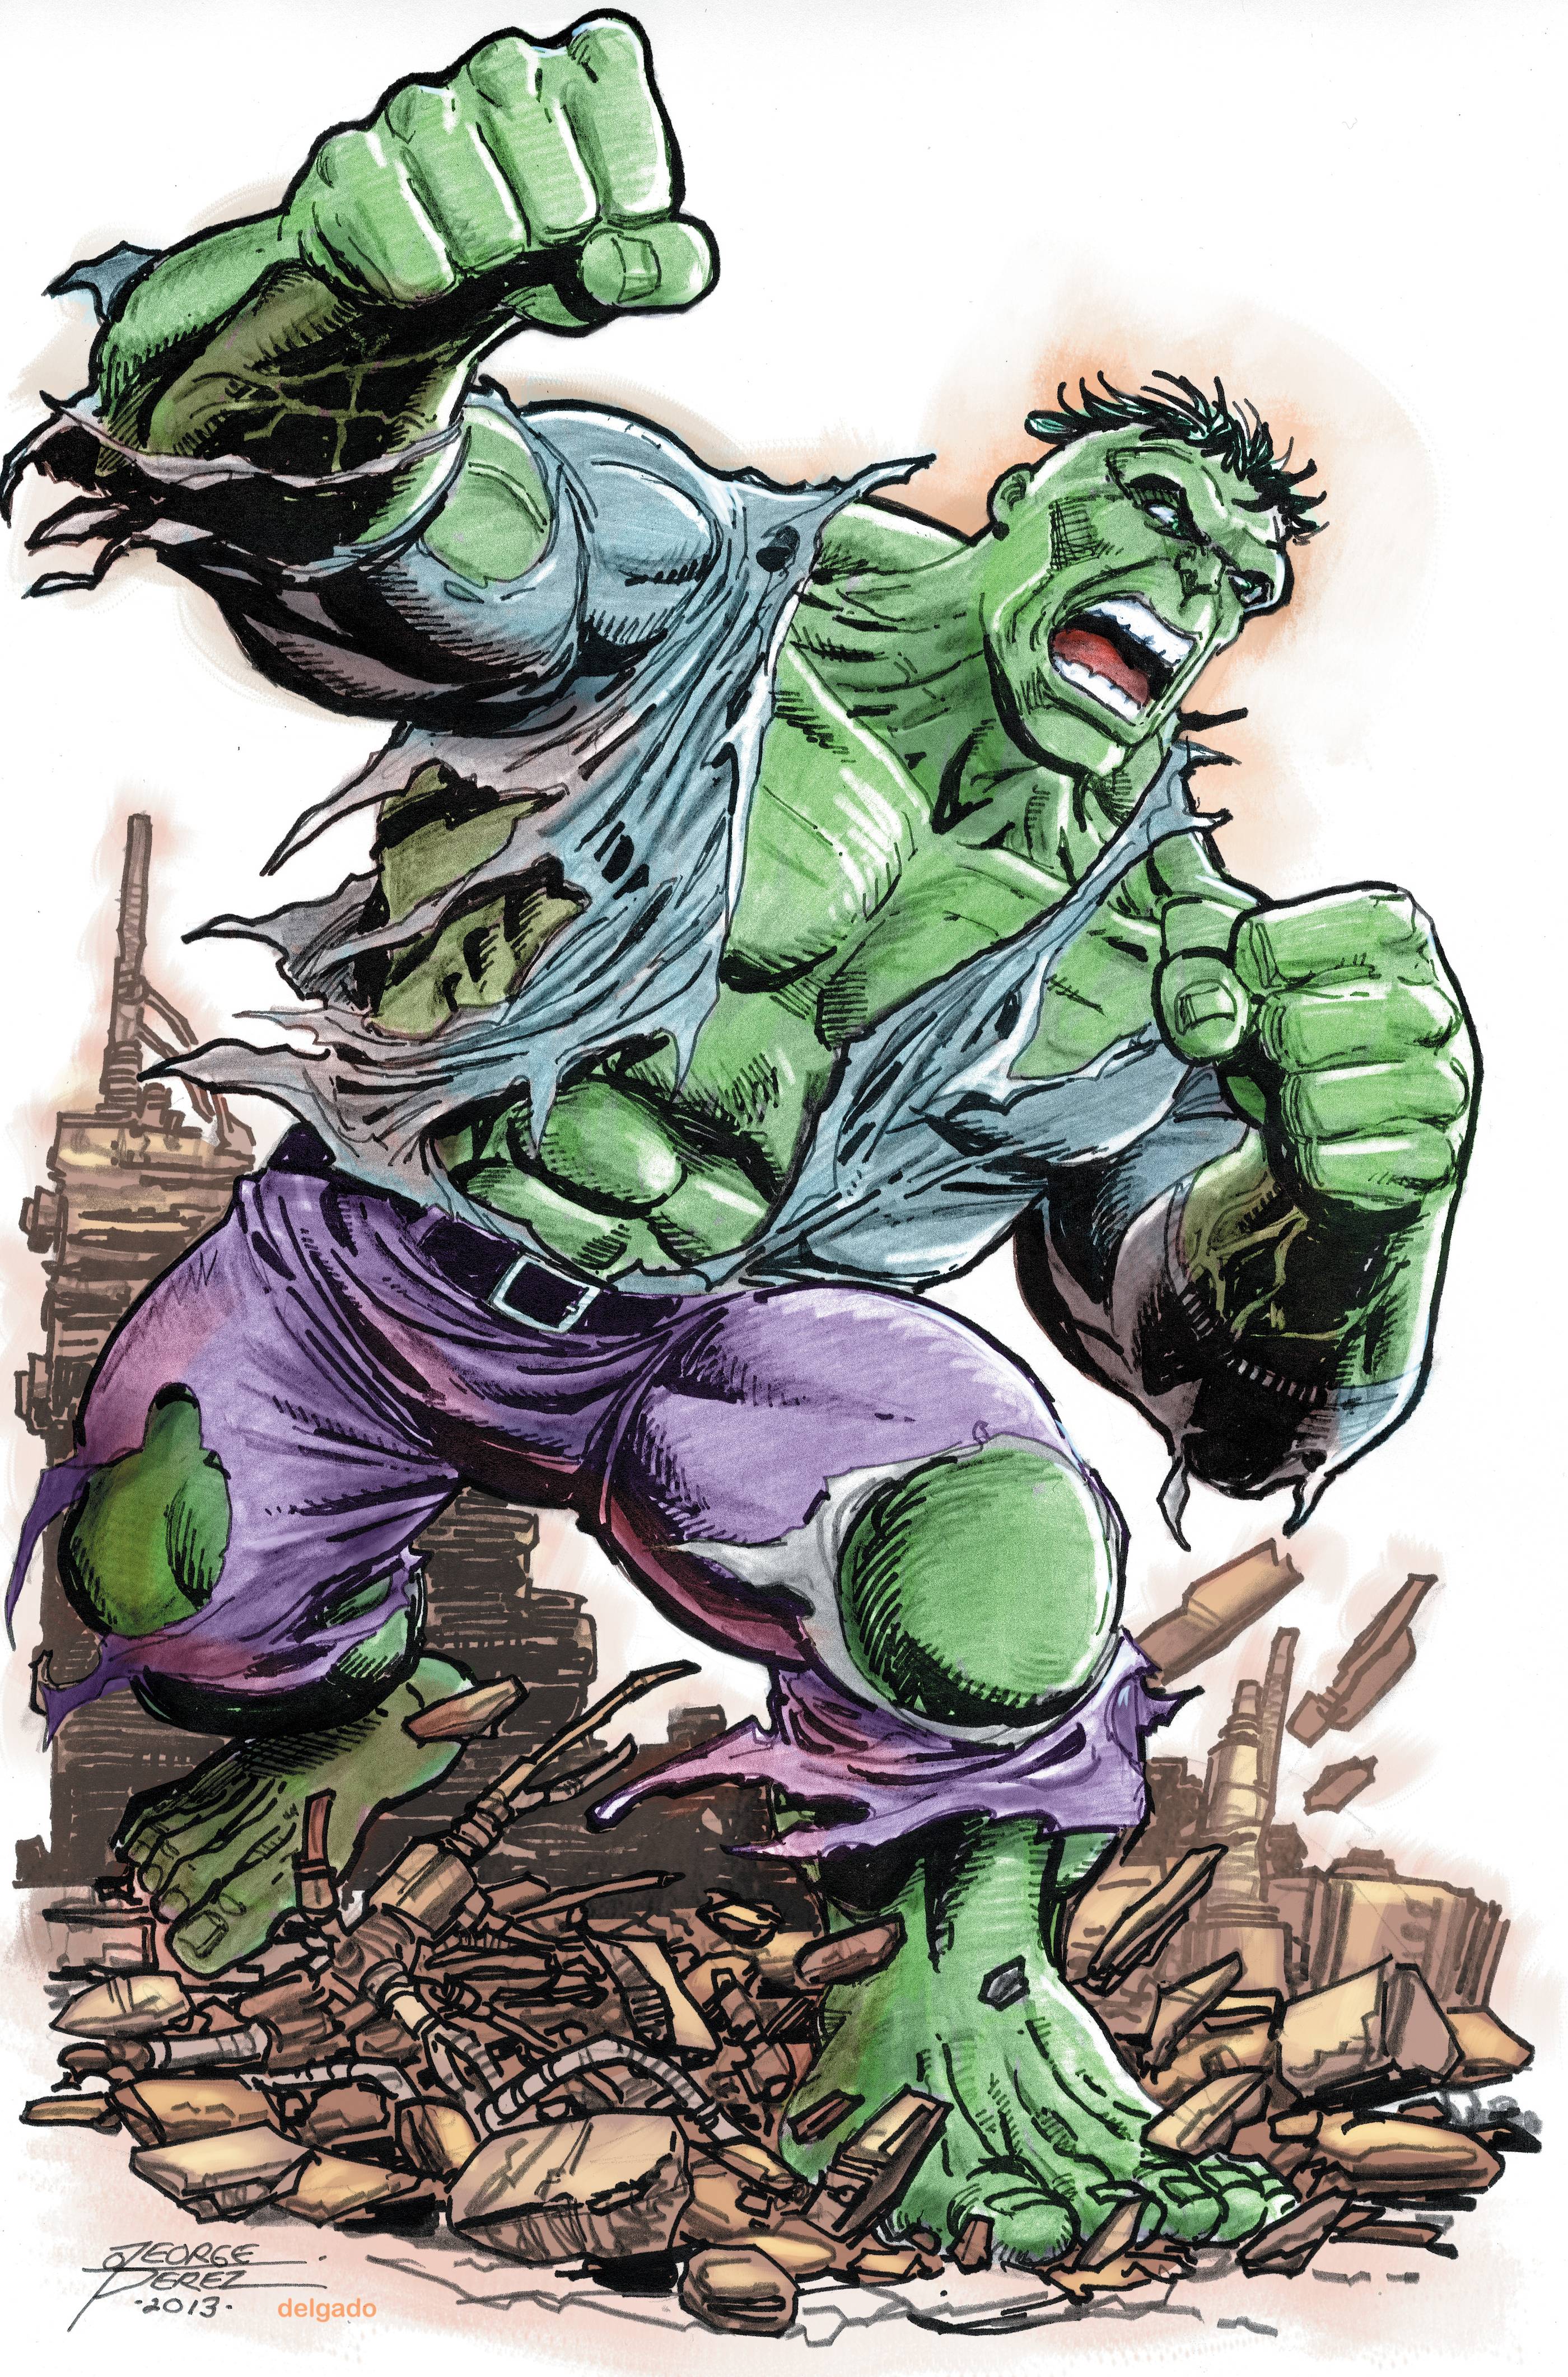 Incredible Hulk Cartoon drawing free image download